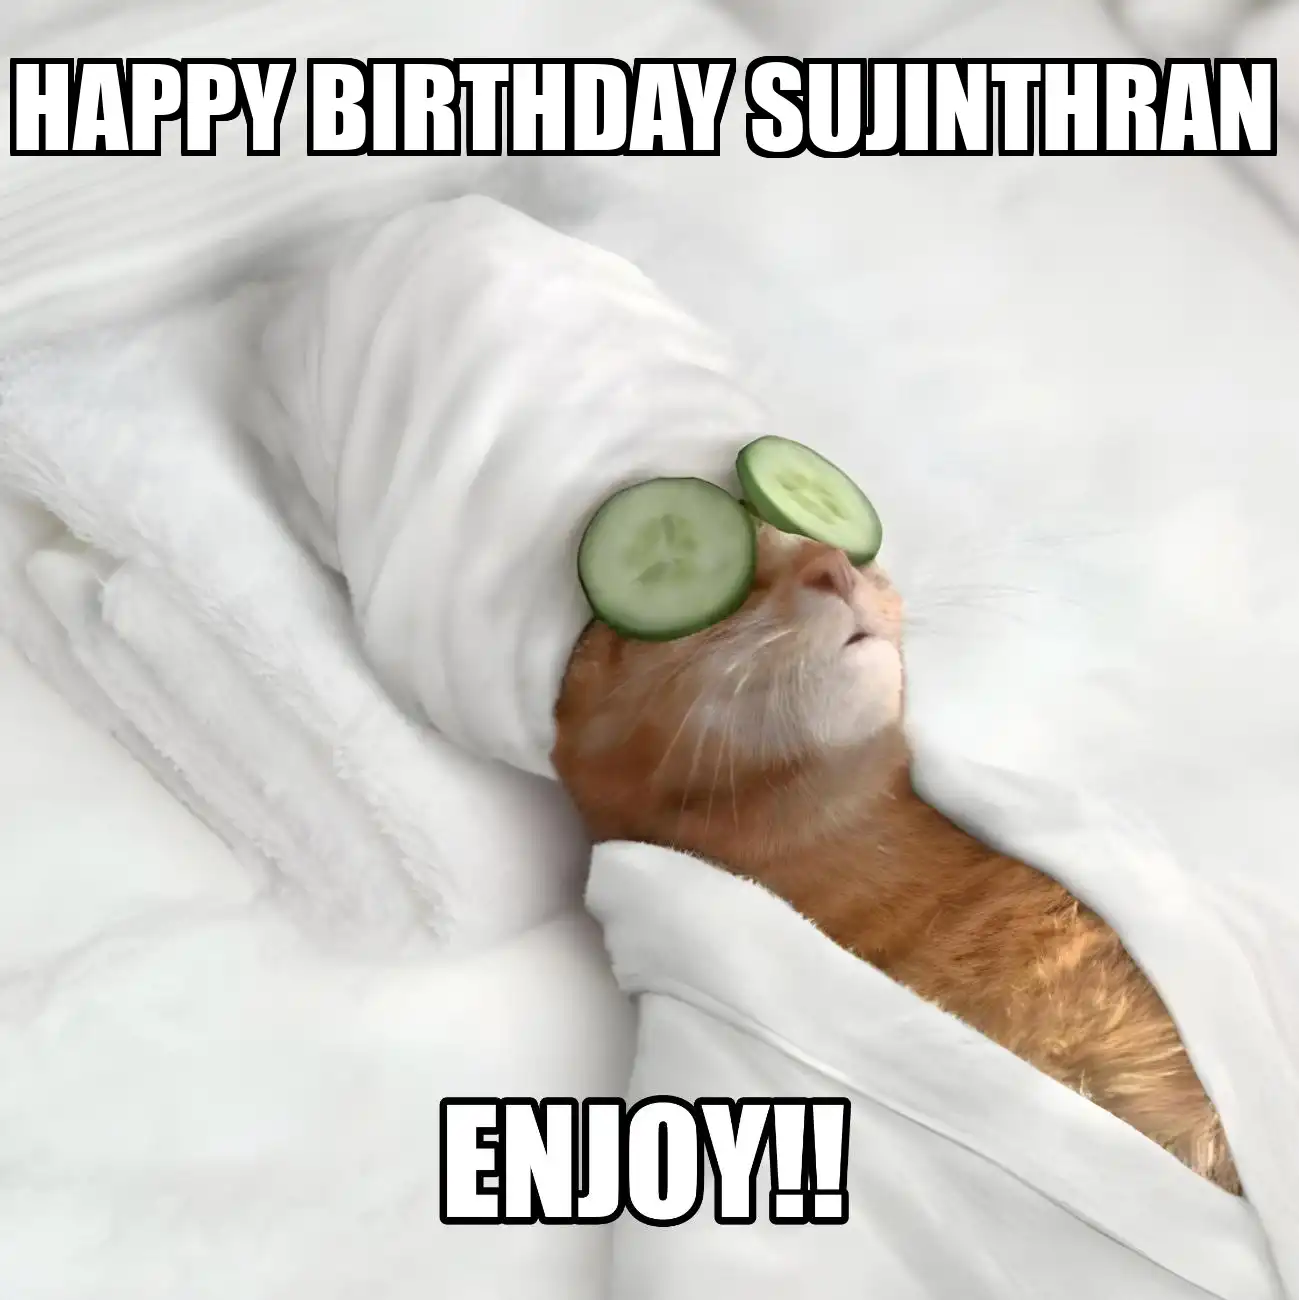 Happy Birthday Sujinthran Enjoy Cat Meme